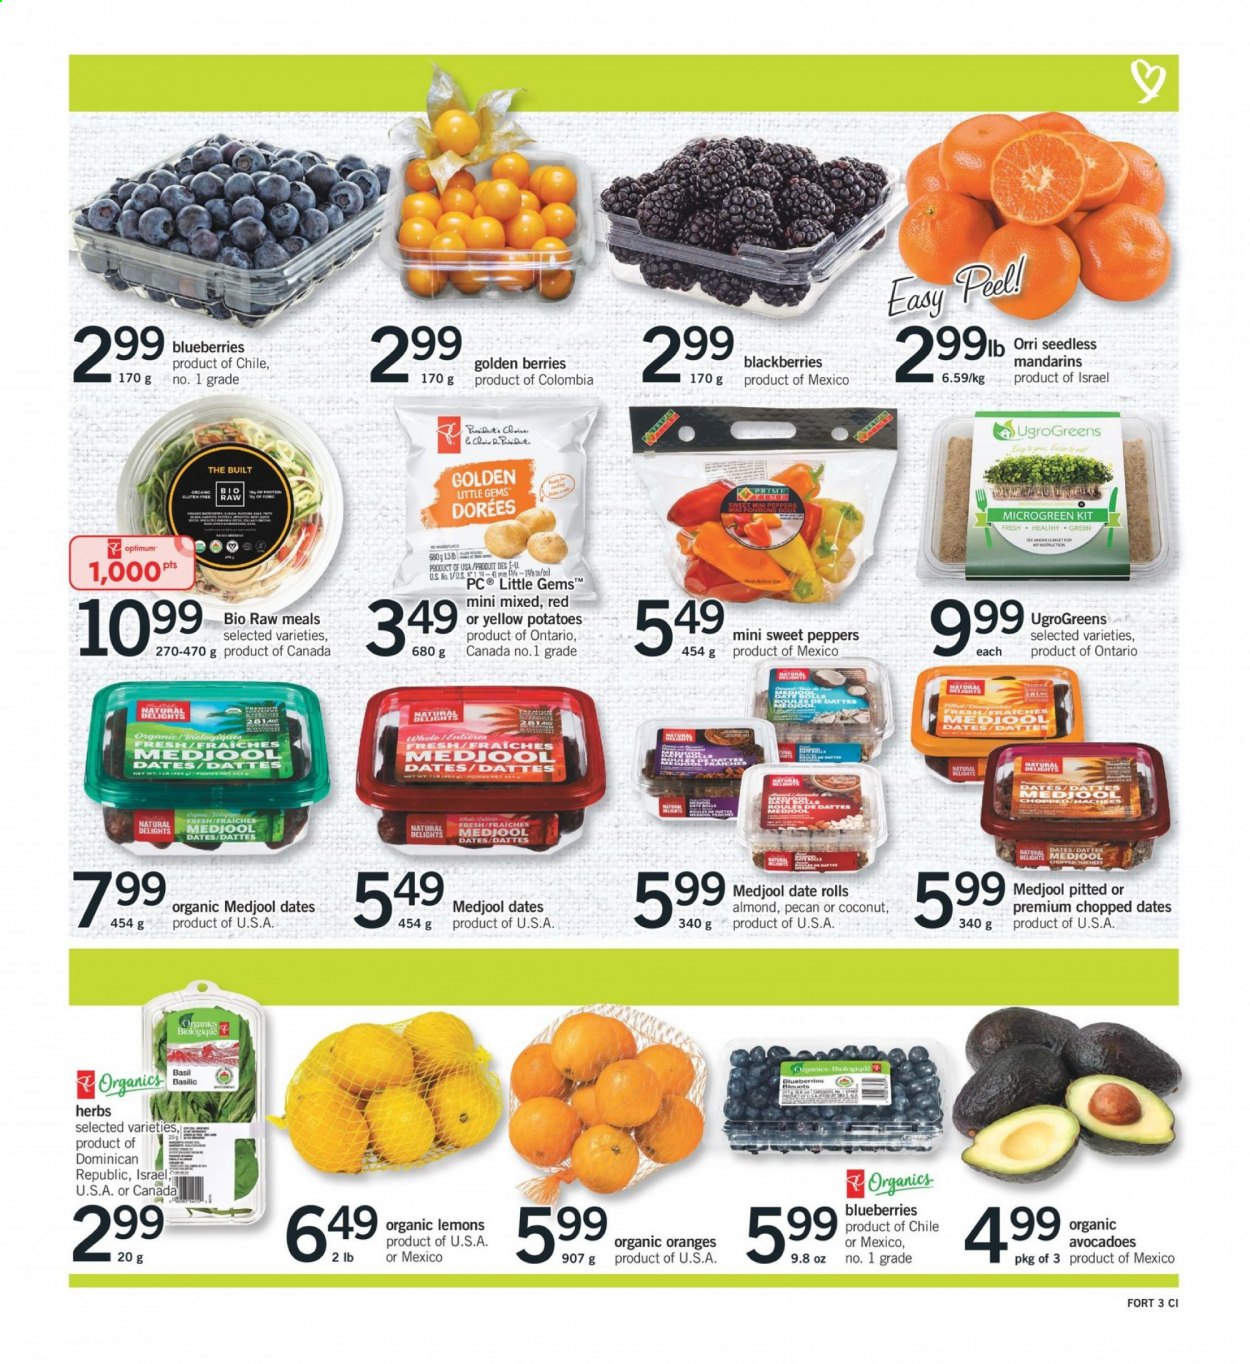 thumbnail - Fortinos Flyer - March 18, 2021 - March 24, 2021 - Sales products - sweet peppers, potatoes, peppers, blackberries, blueberries, mandarines, lemons, esponja, herbs, dried dates, Optimum. Page 3.